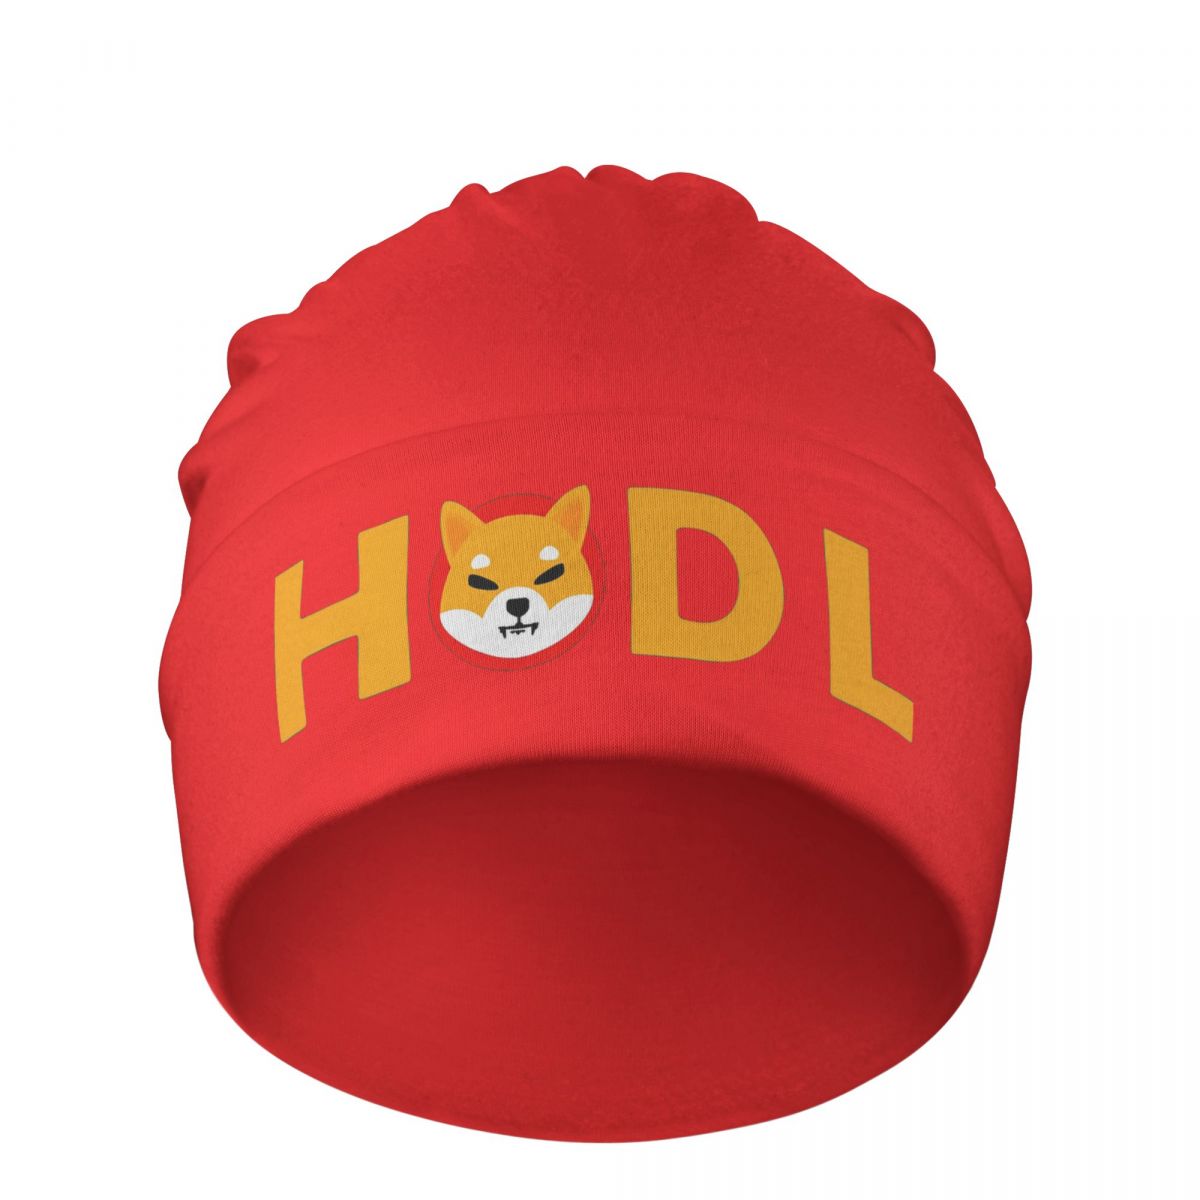 SHIB Shiba Inu HODL knitted hat 7 colors